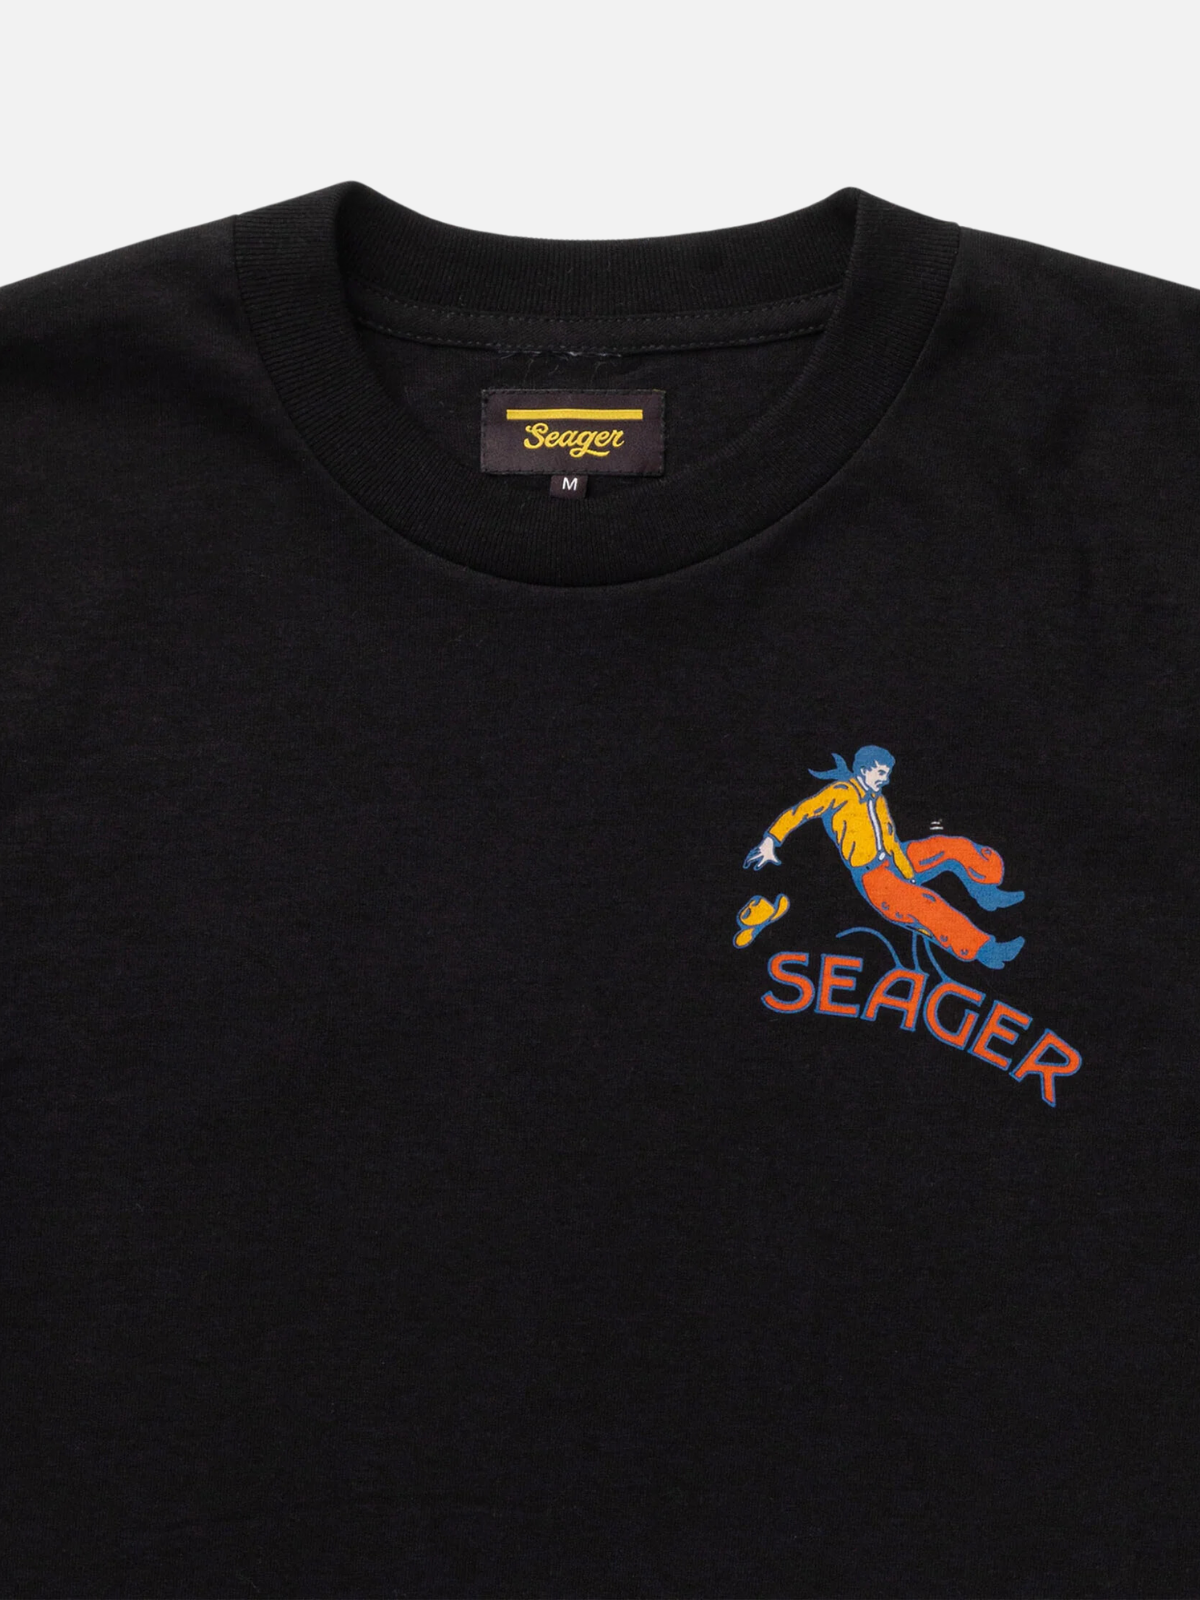 seager rodeo tee black 100% cotton graphic t-shirt kempt athens ga georgia men's clothing store